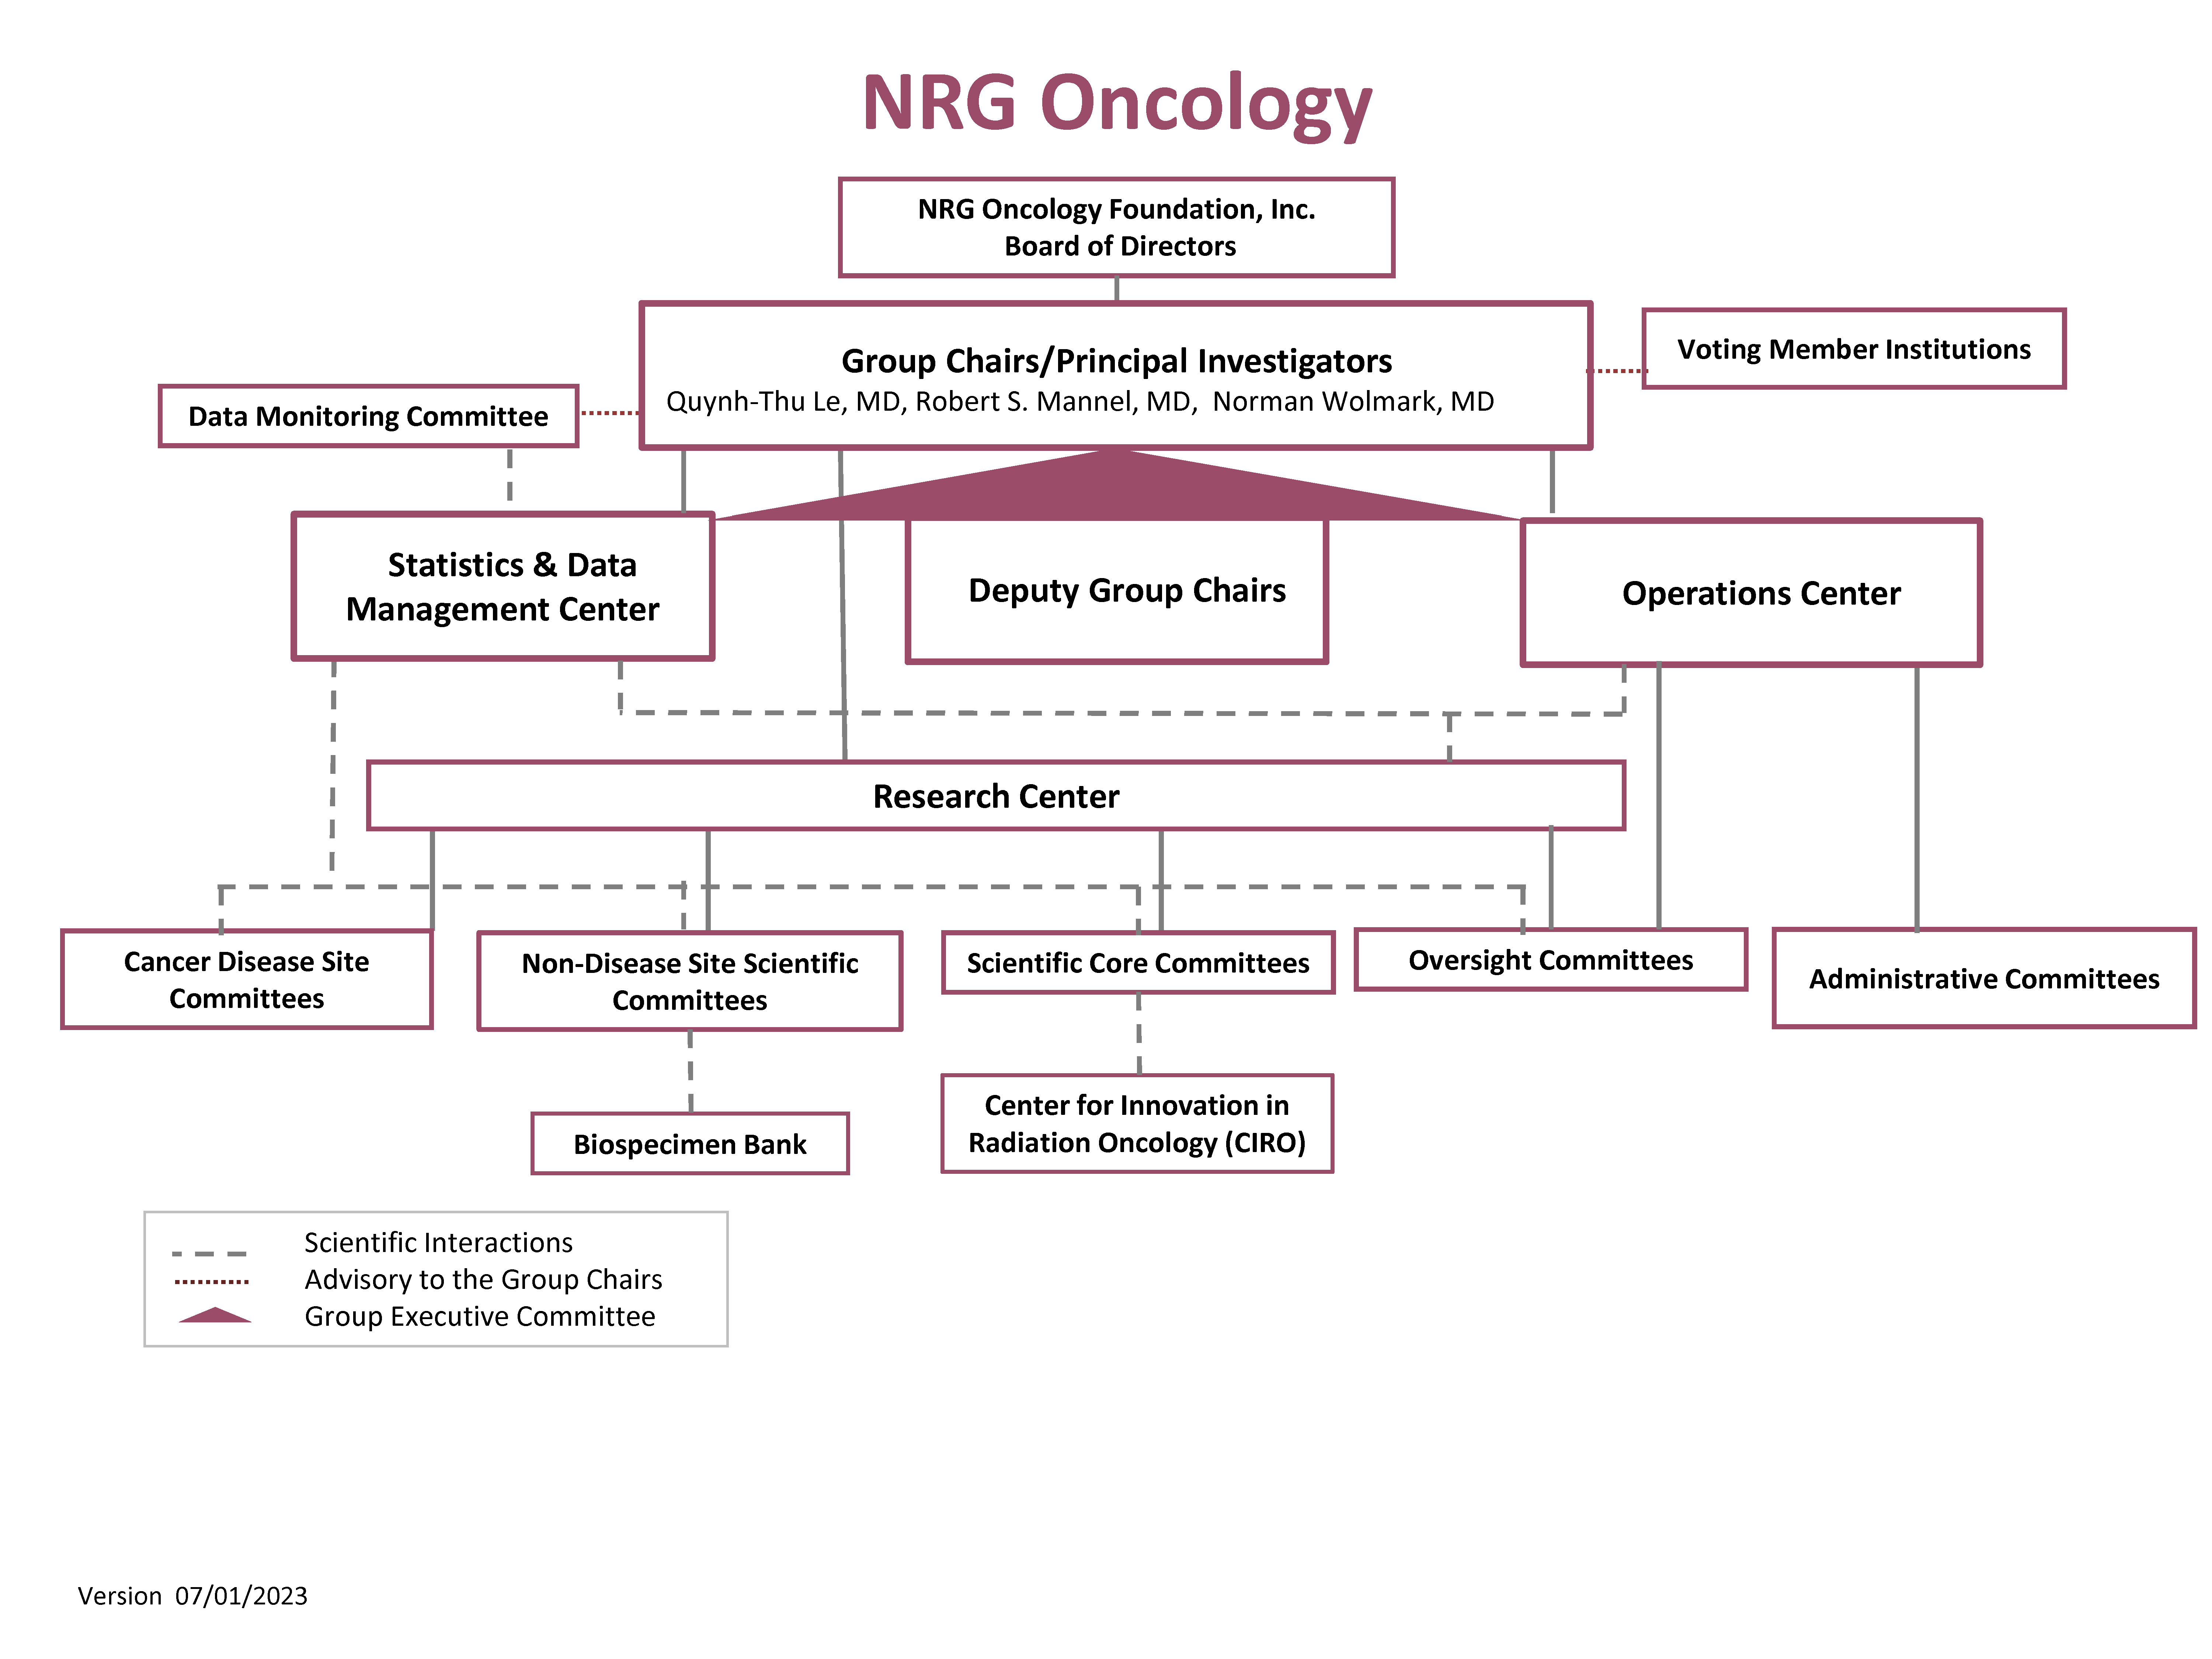 NRG Org Chart 07-01-2023